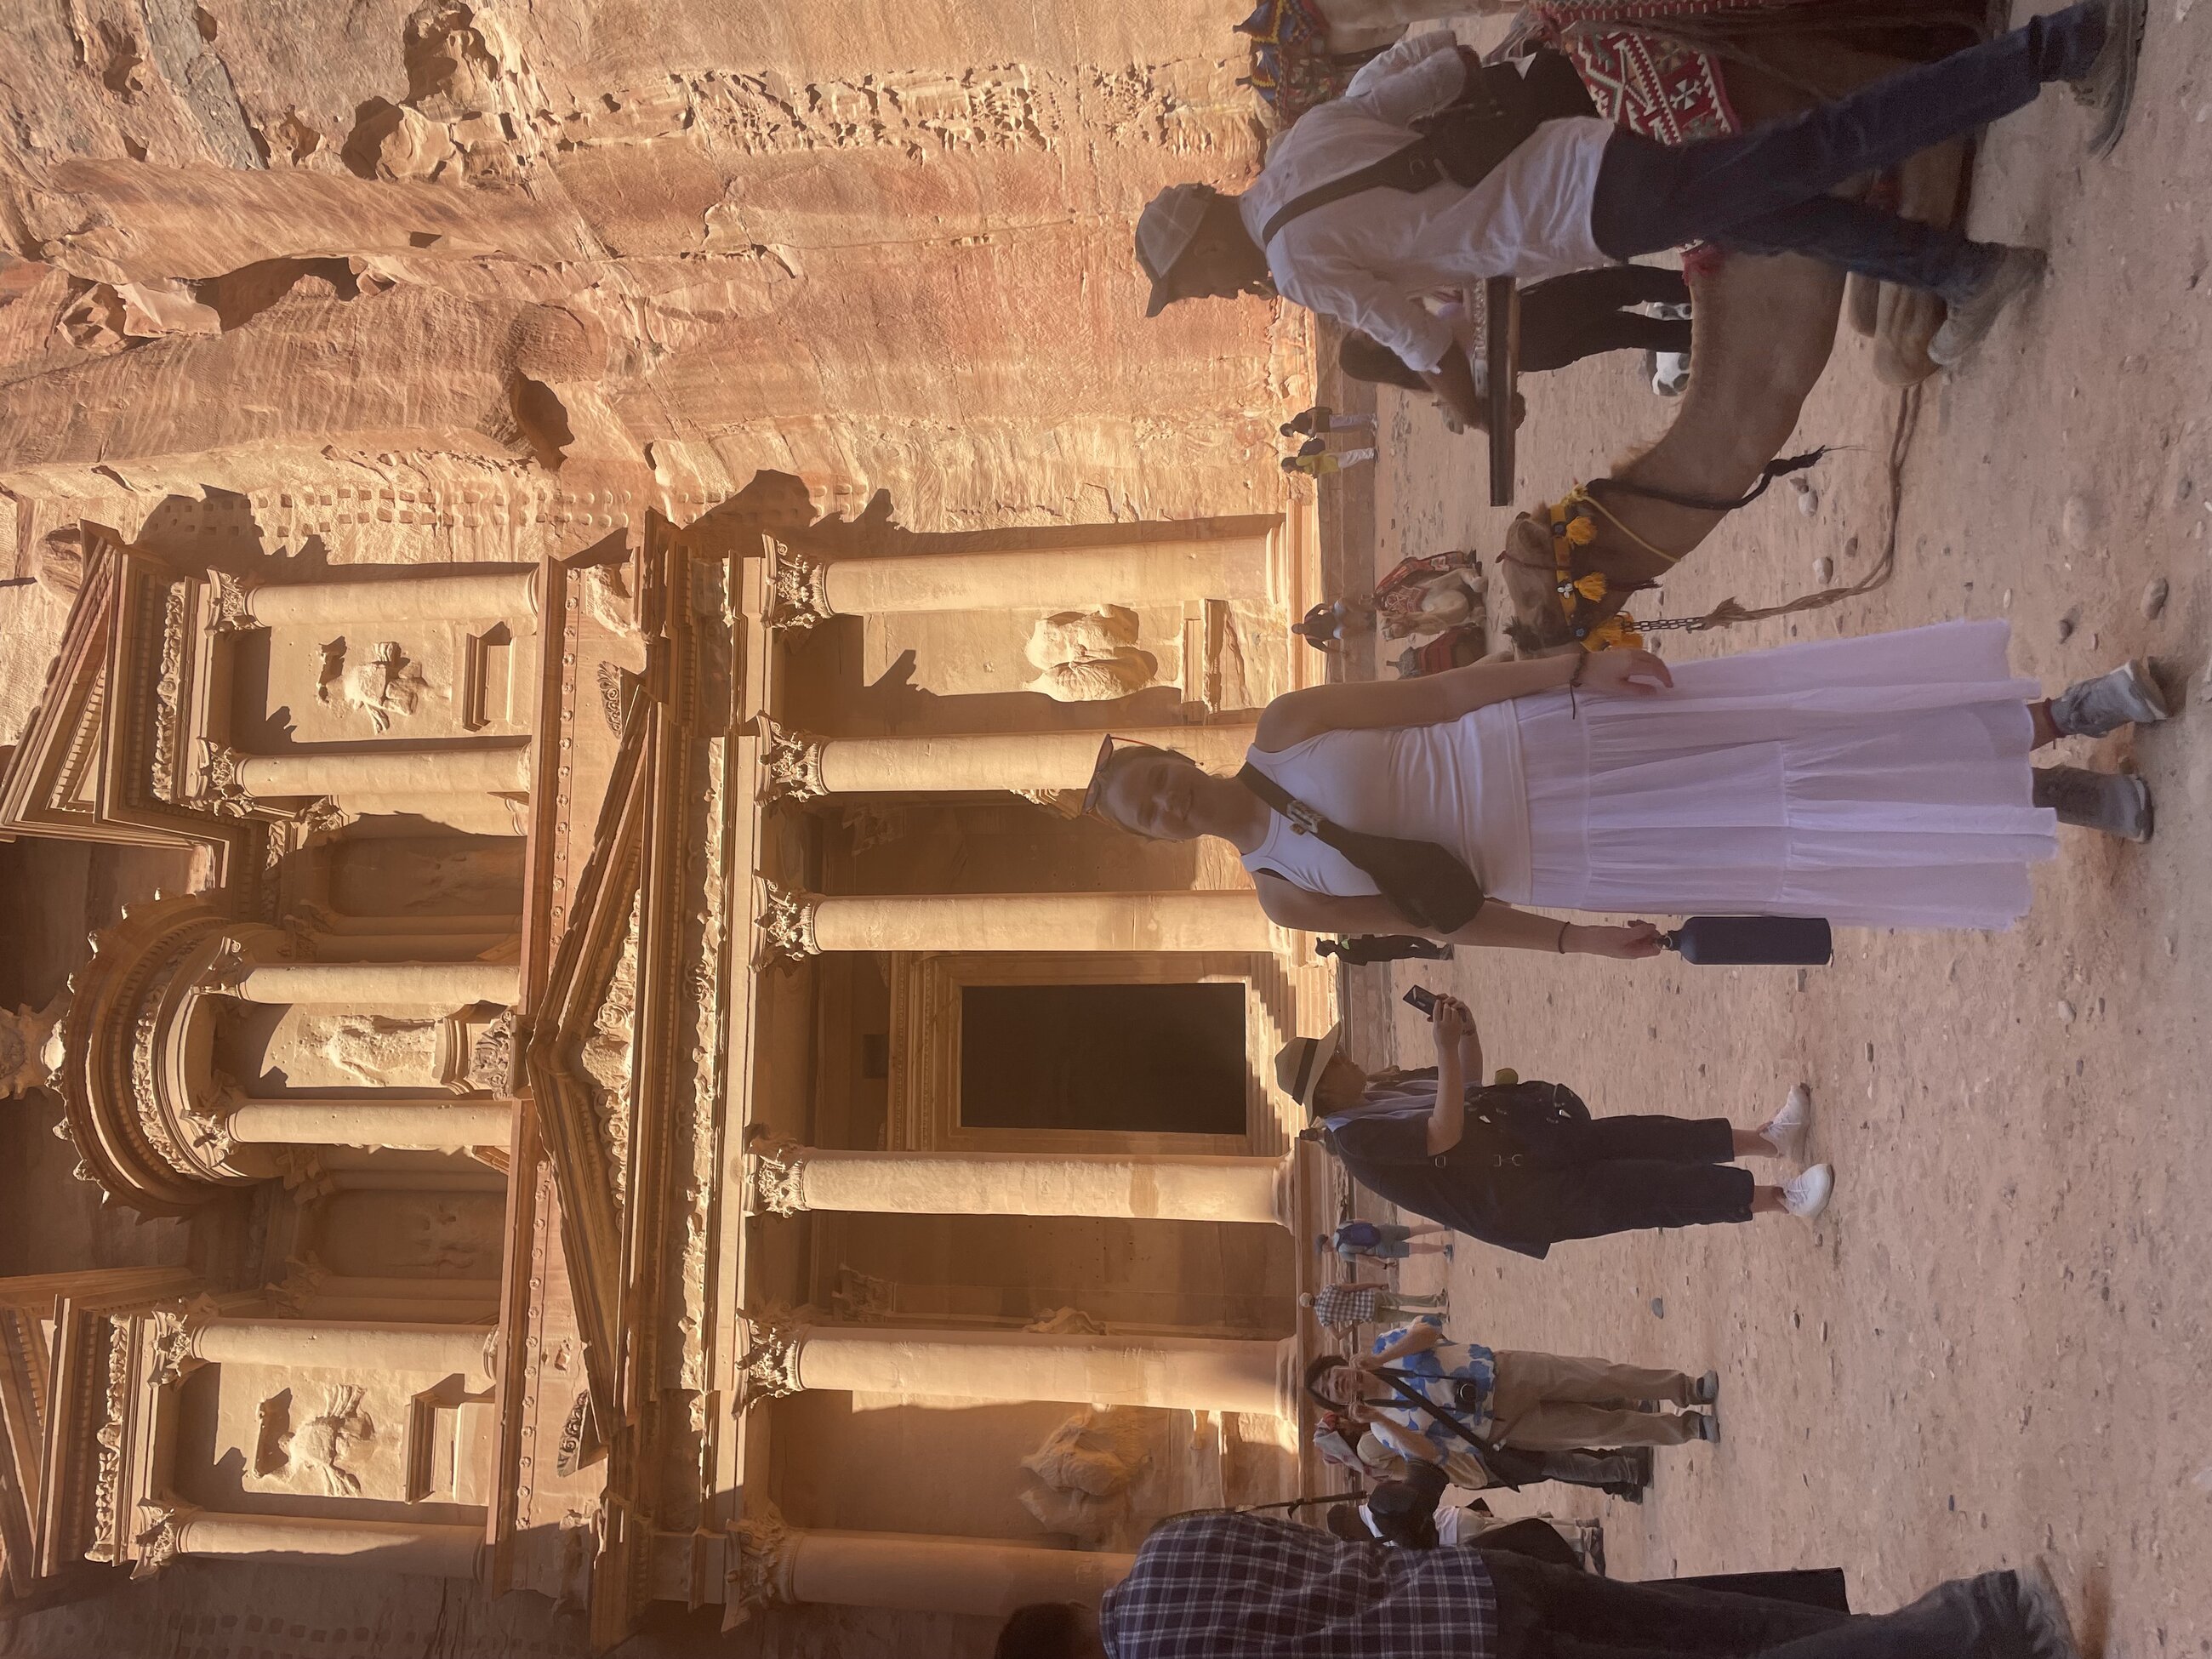 Visitng Petra